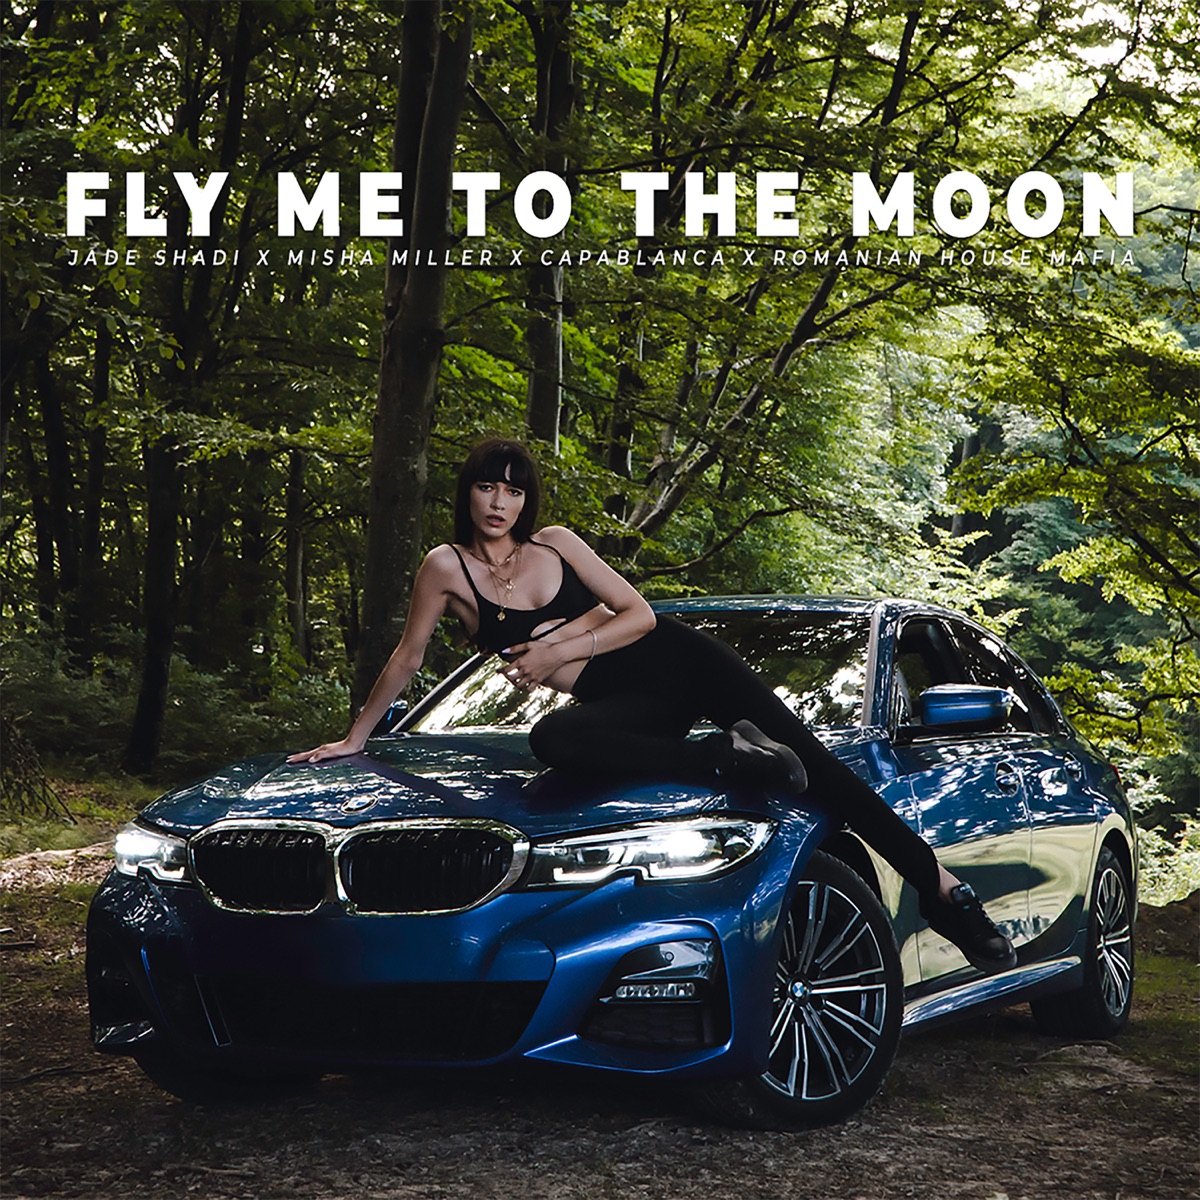 Jade Shadi, Misha Miller, Capablanca, & Romanian House Mafia Fly Me To The Moon cover artwork